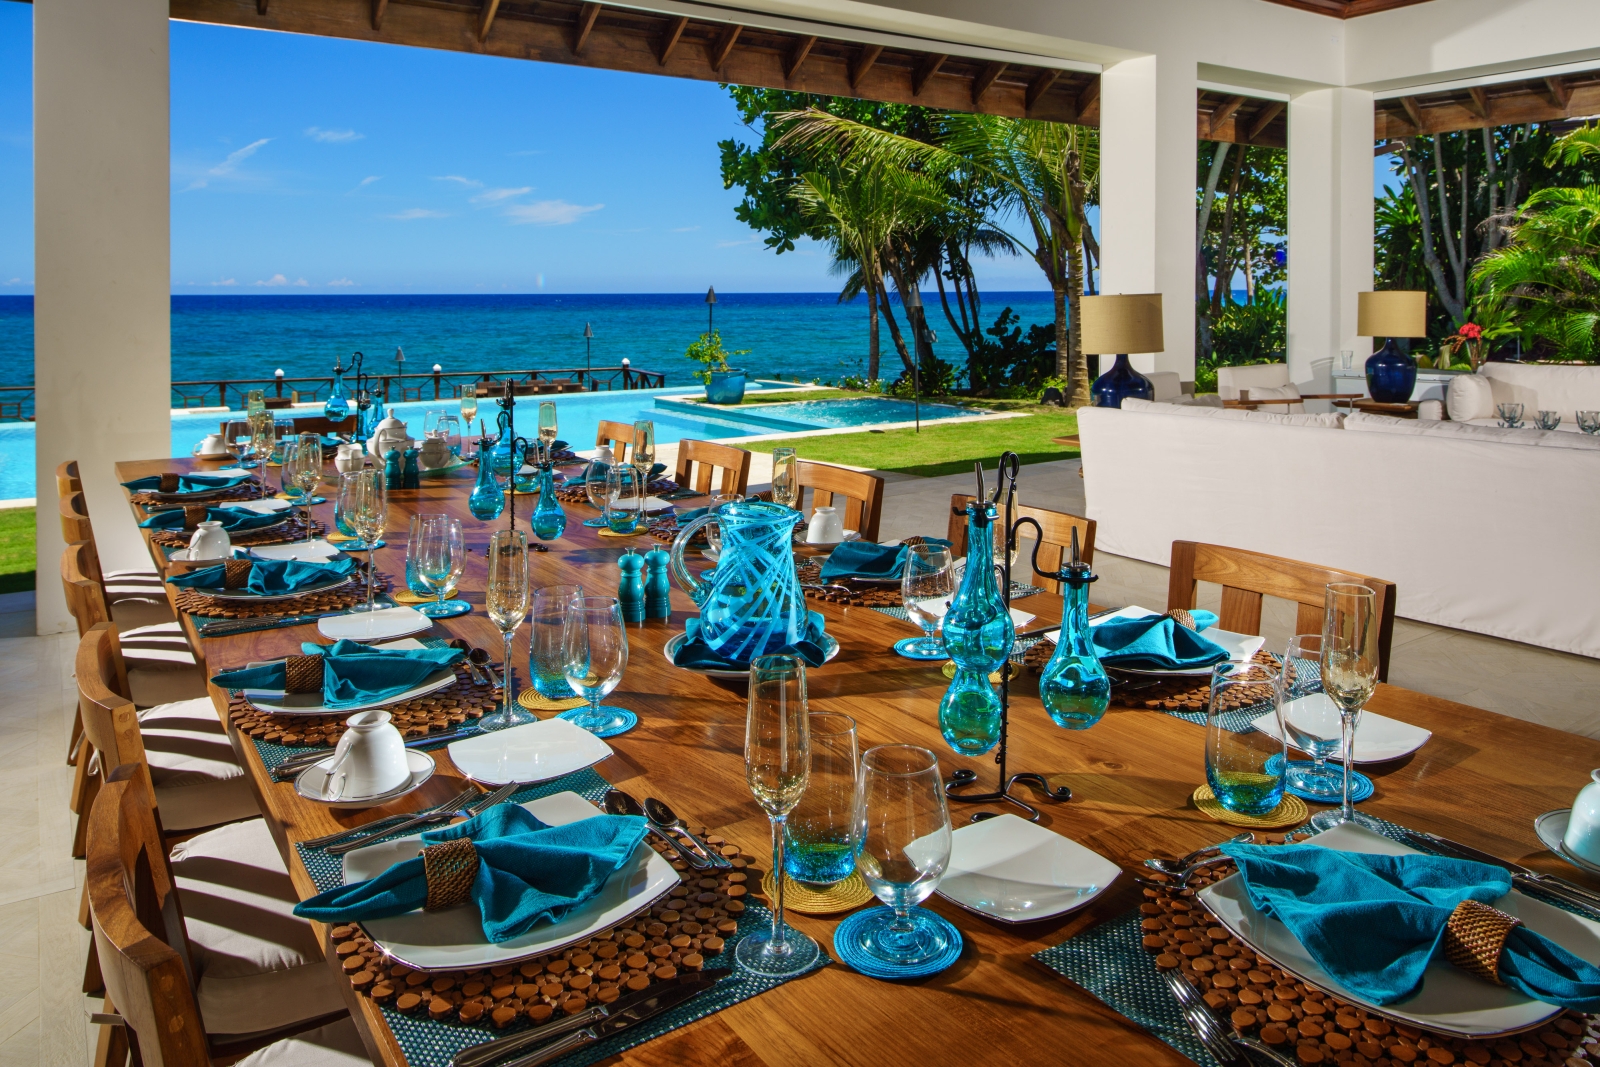 Outdoor dining at Aqua Bay in Jamaica